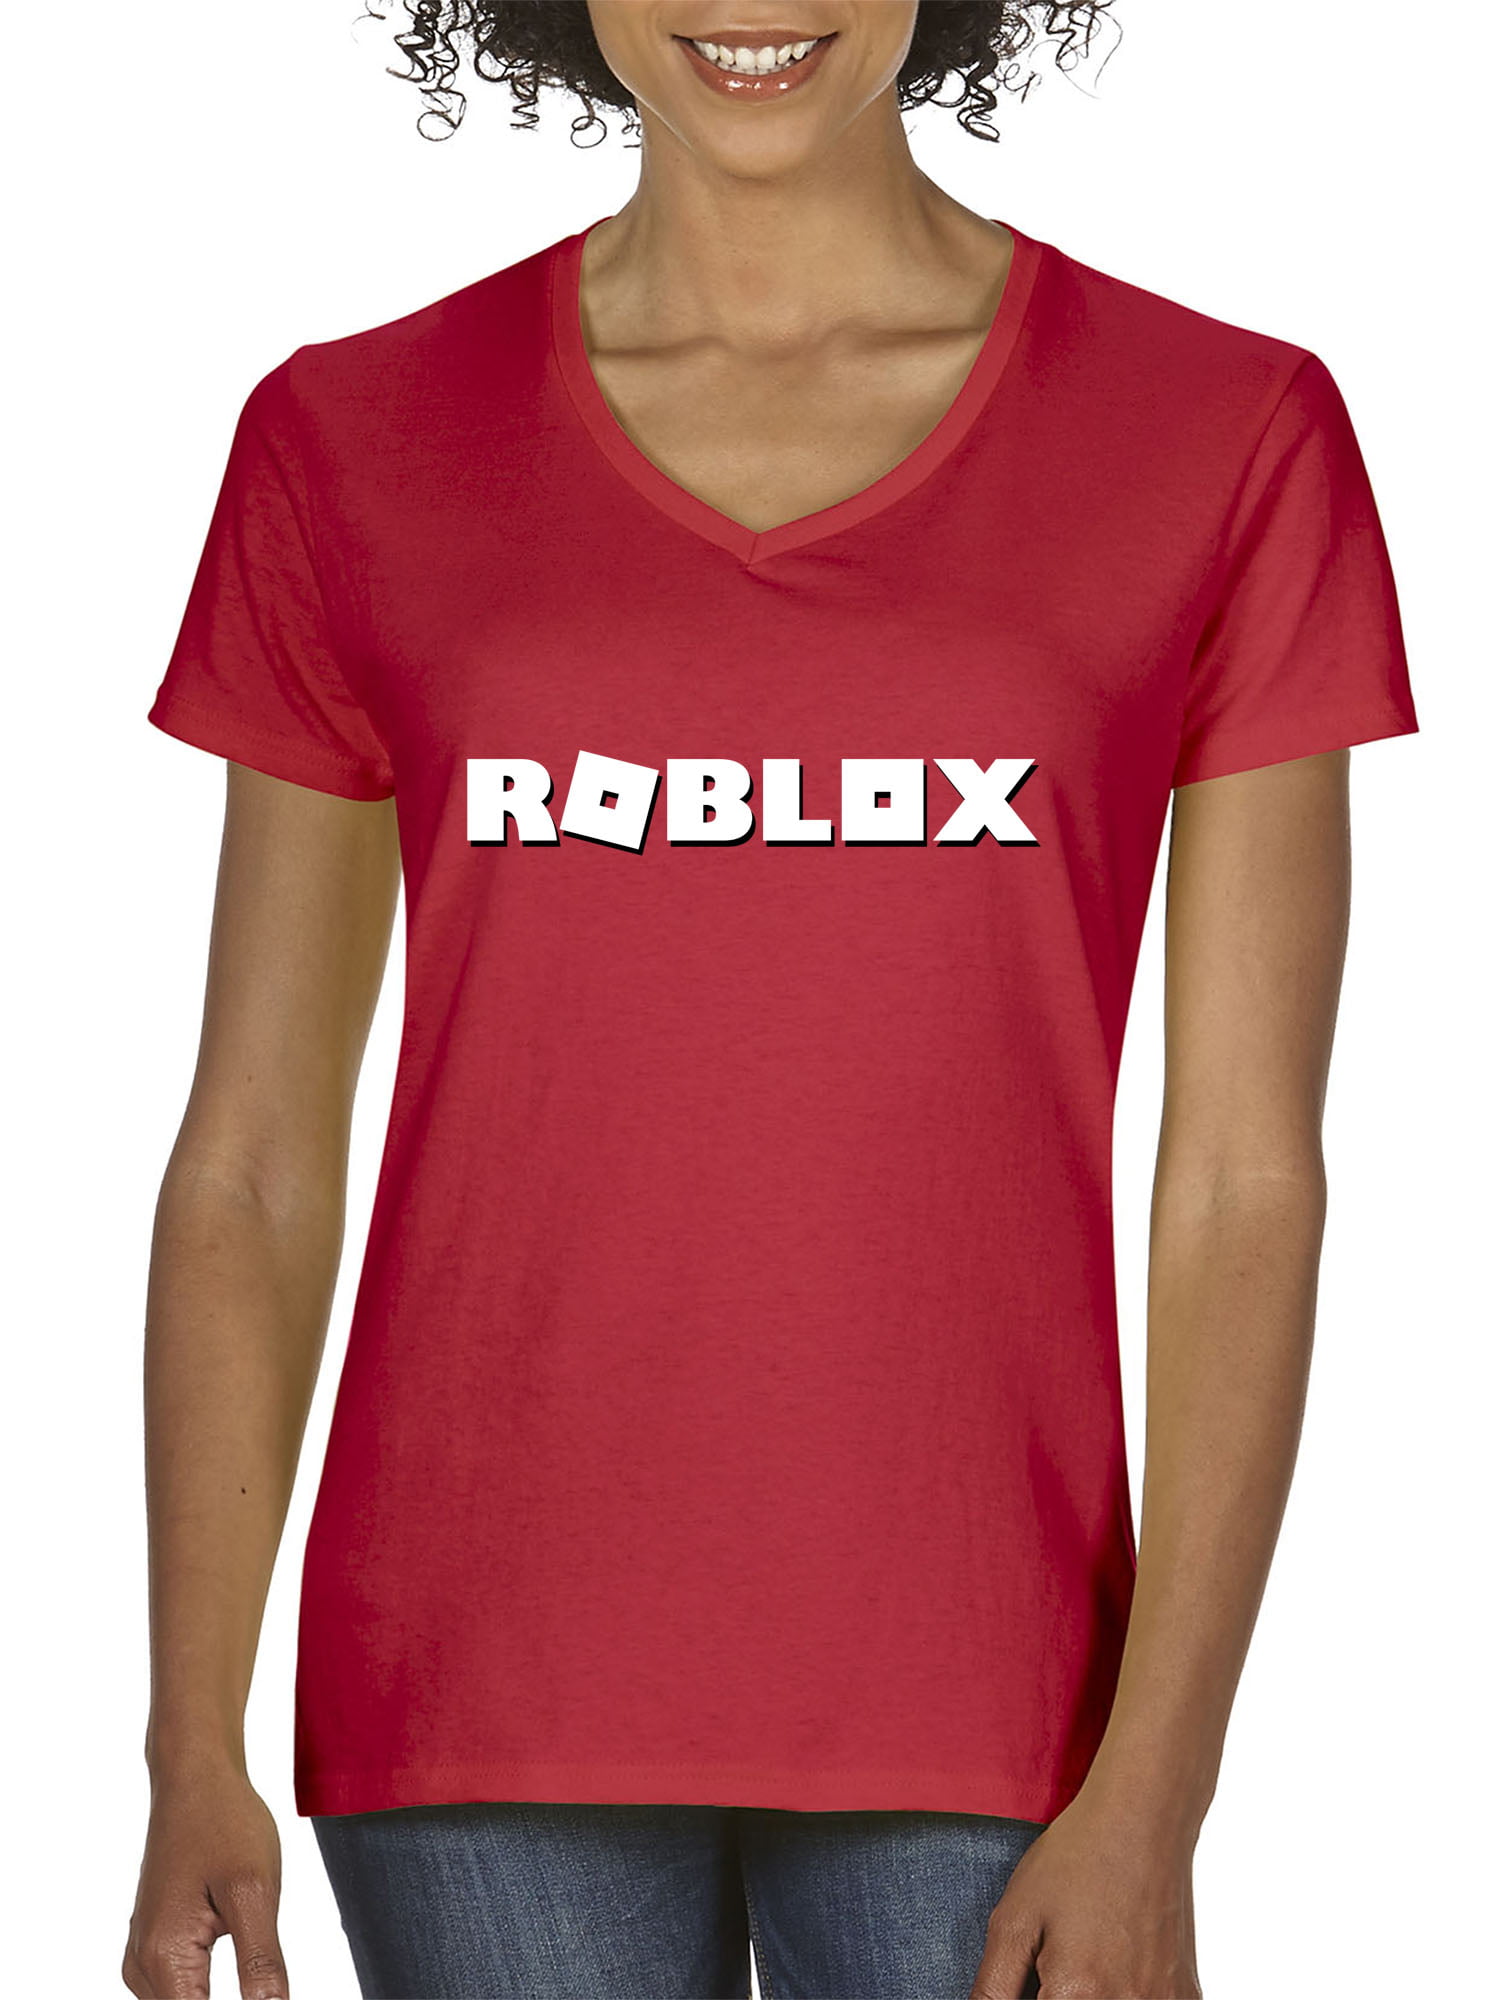 New Way New Way 923 Women S V Neck T Shirt Roblox Logo Game Accent Xs Red Walmart Com Walmart Com - black jeans tied plaid flannel white v roblox